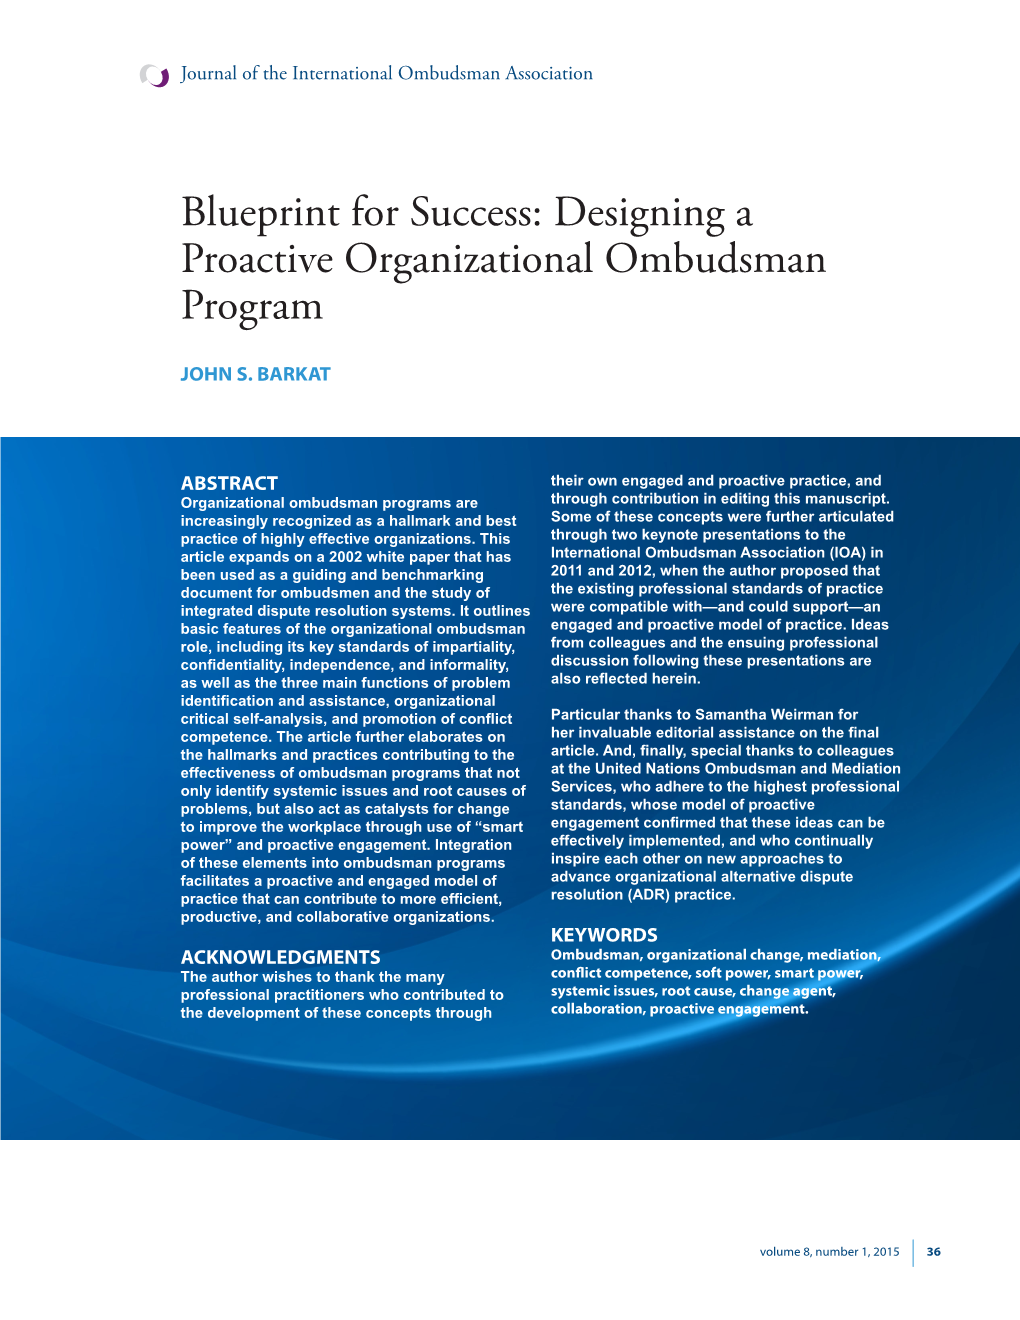 Blueprint for Success: Designing a Proactive Organizational Ombudsman Program